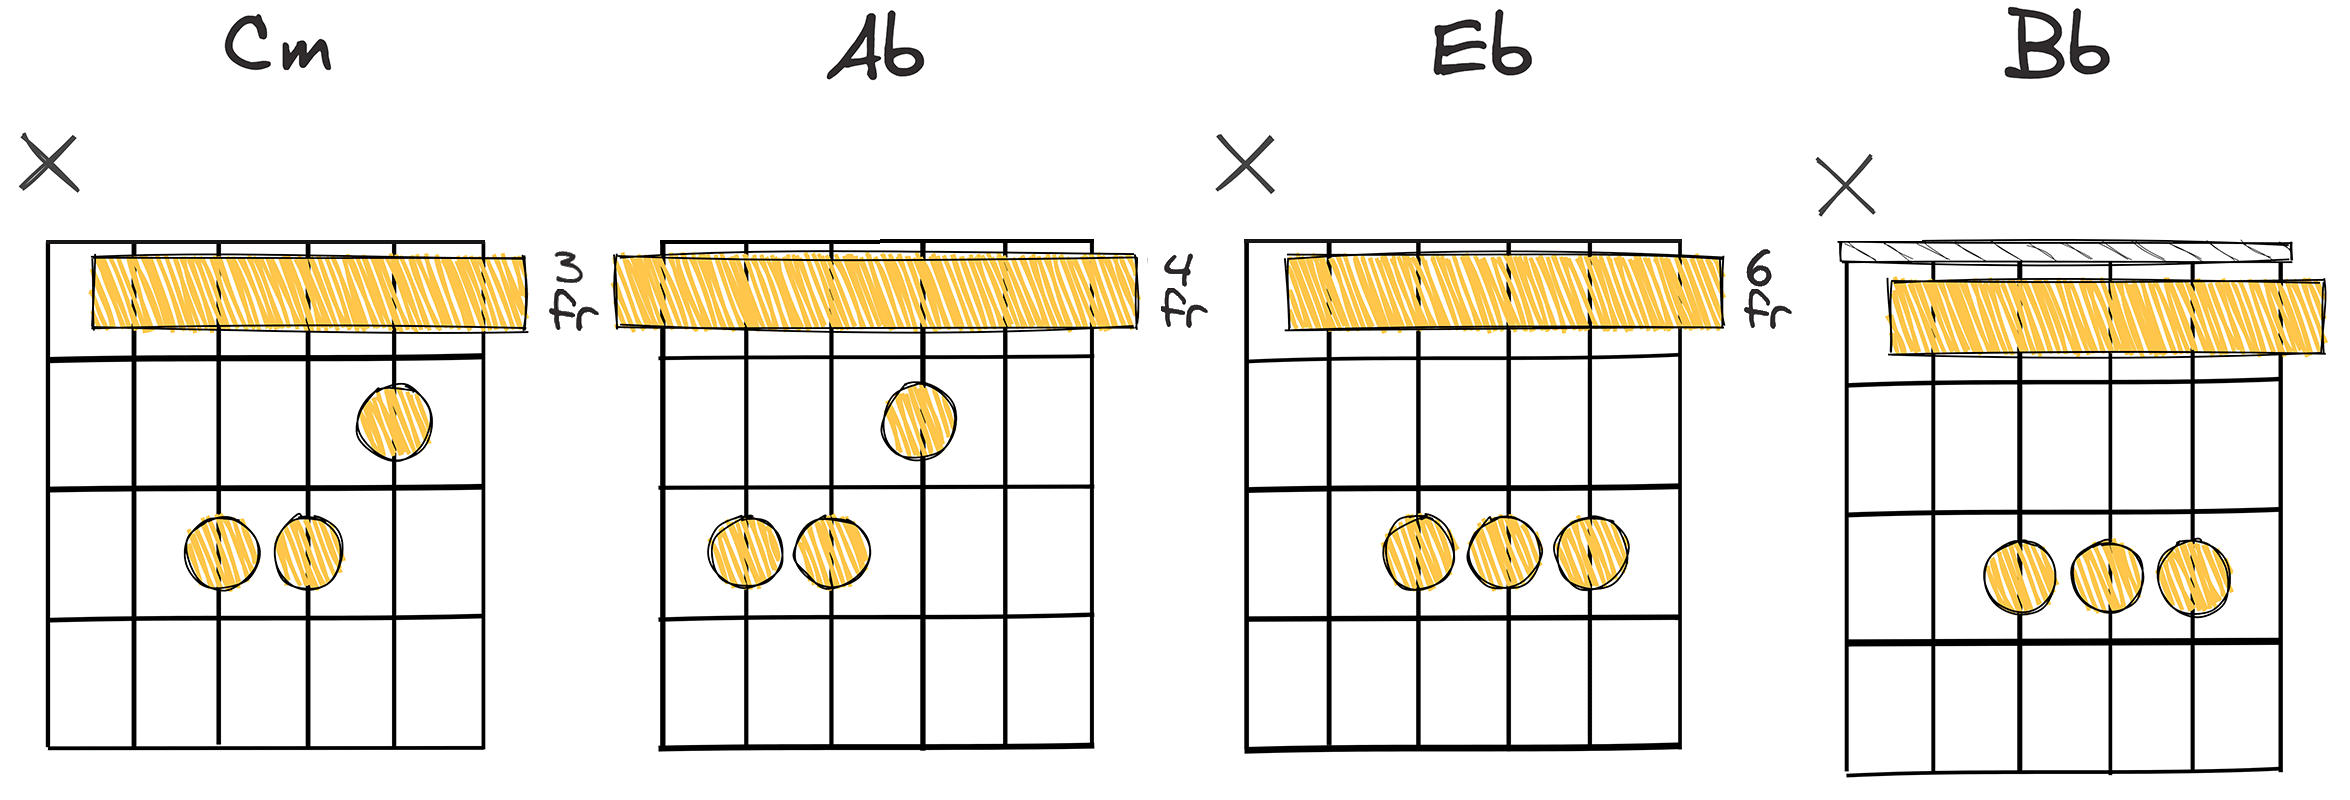 i - VI - III - VII (1-6-3-7) chords diagram